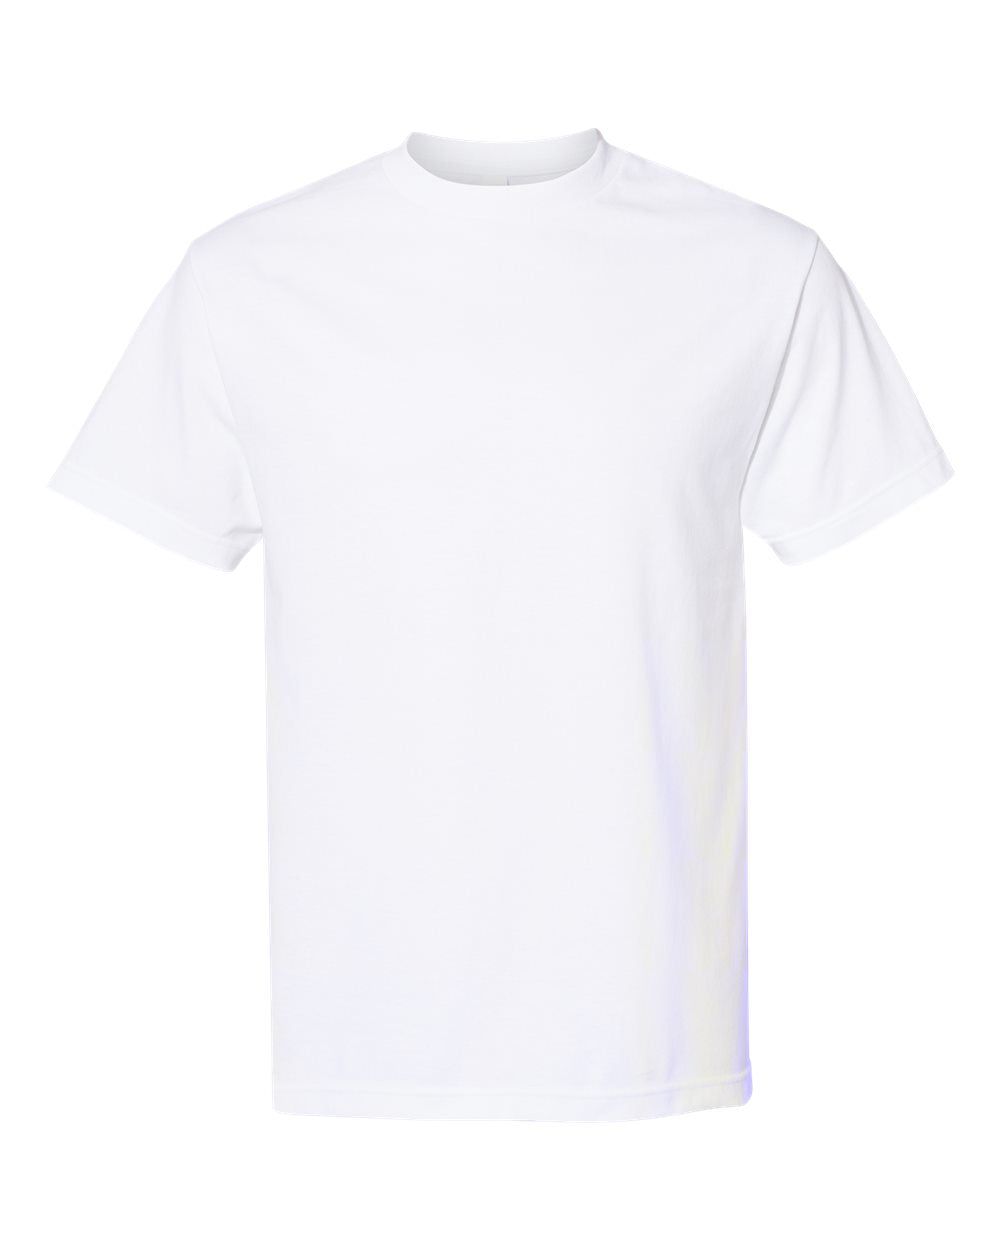 American Apparel - Unisex Heavyweight Cotton T-shirt